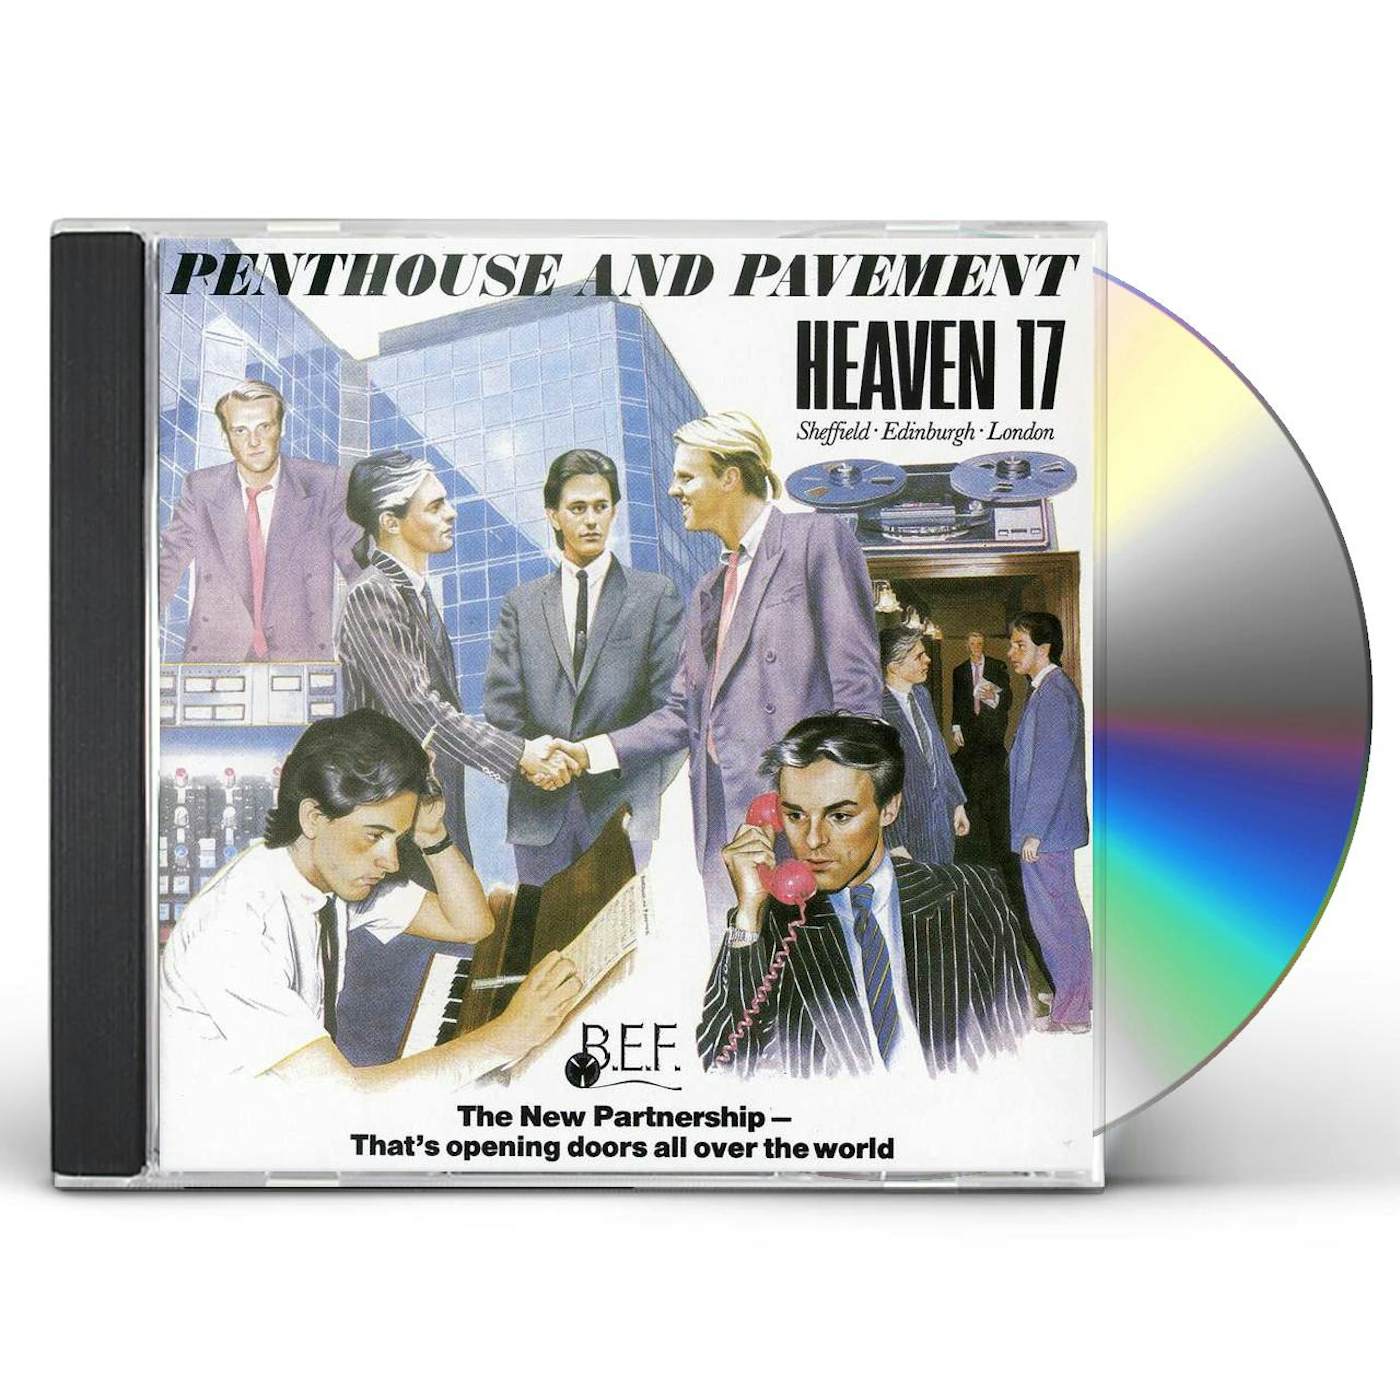 Heaven 17 PENTHOUSE & PAVEMENT CD